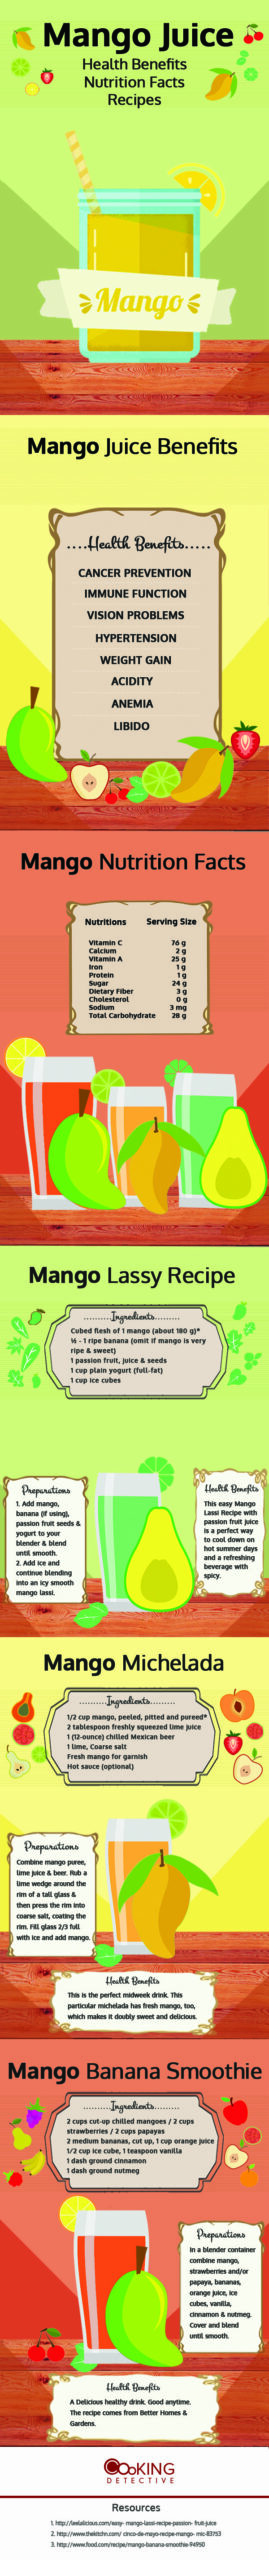 Mango Juice Health Benefits, Nutrition Facts